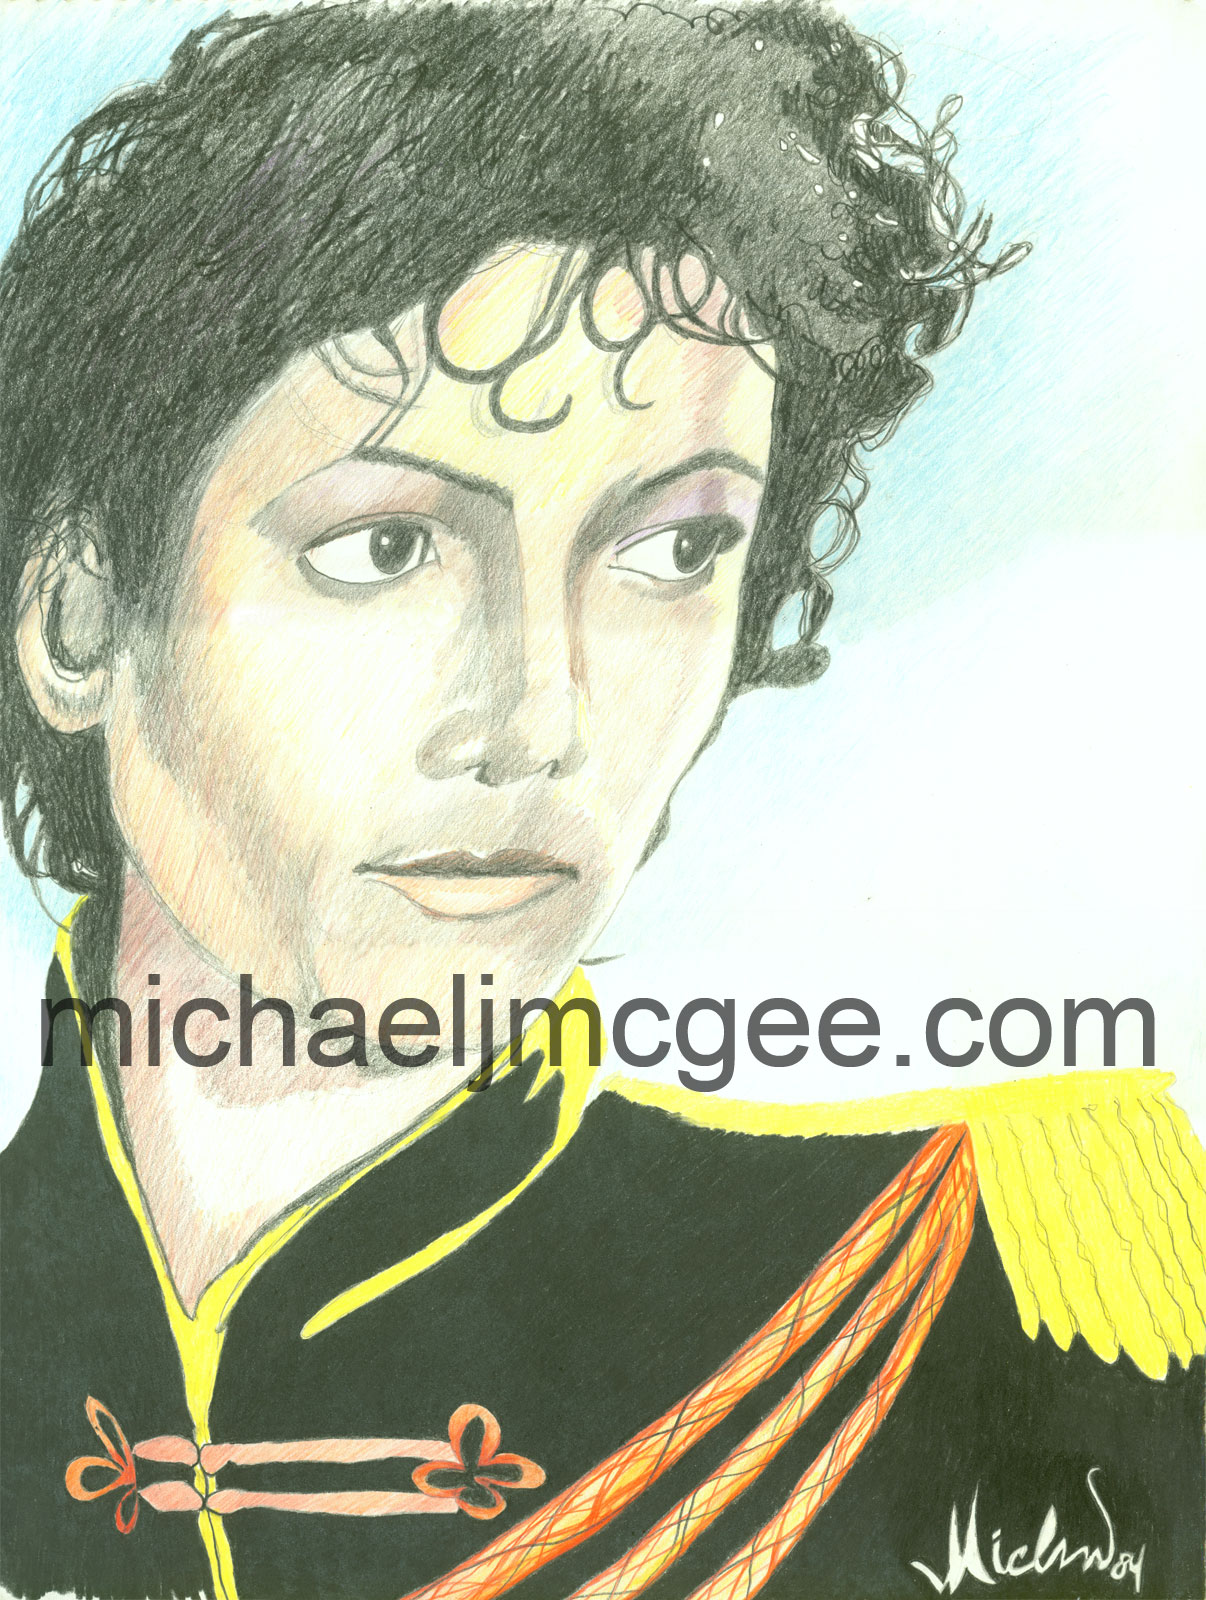 Michael Jackson / MJM Artworks / michaeljmcgee.com